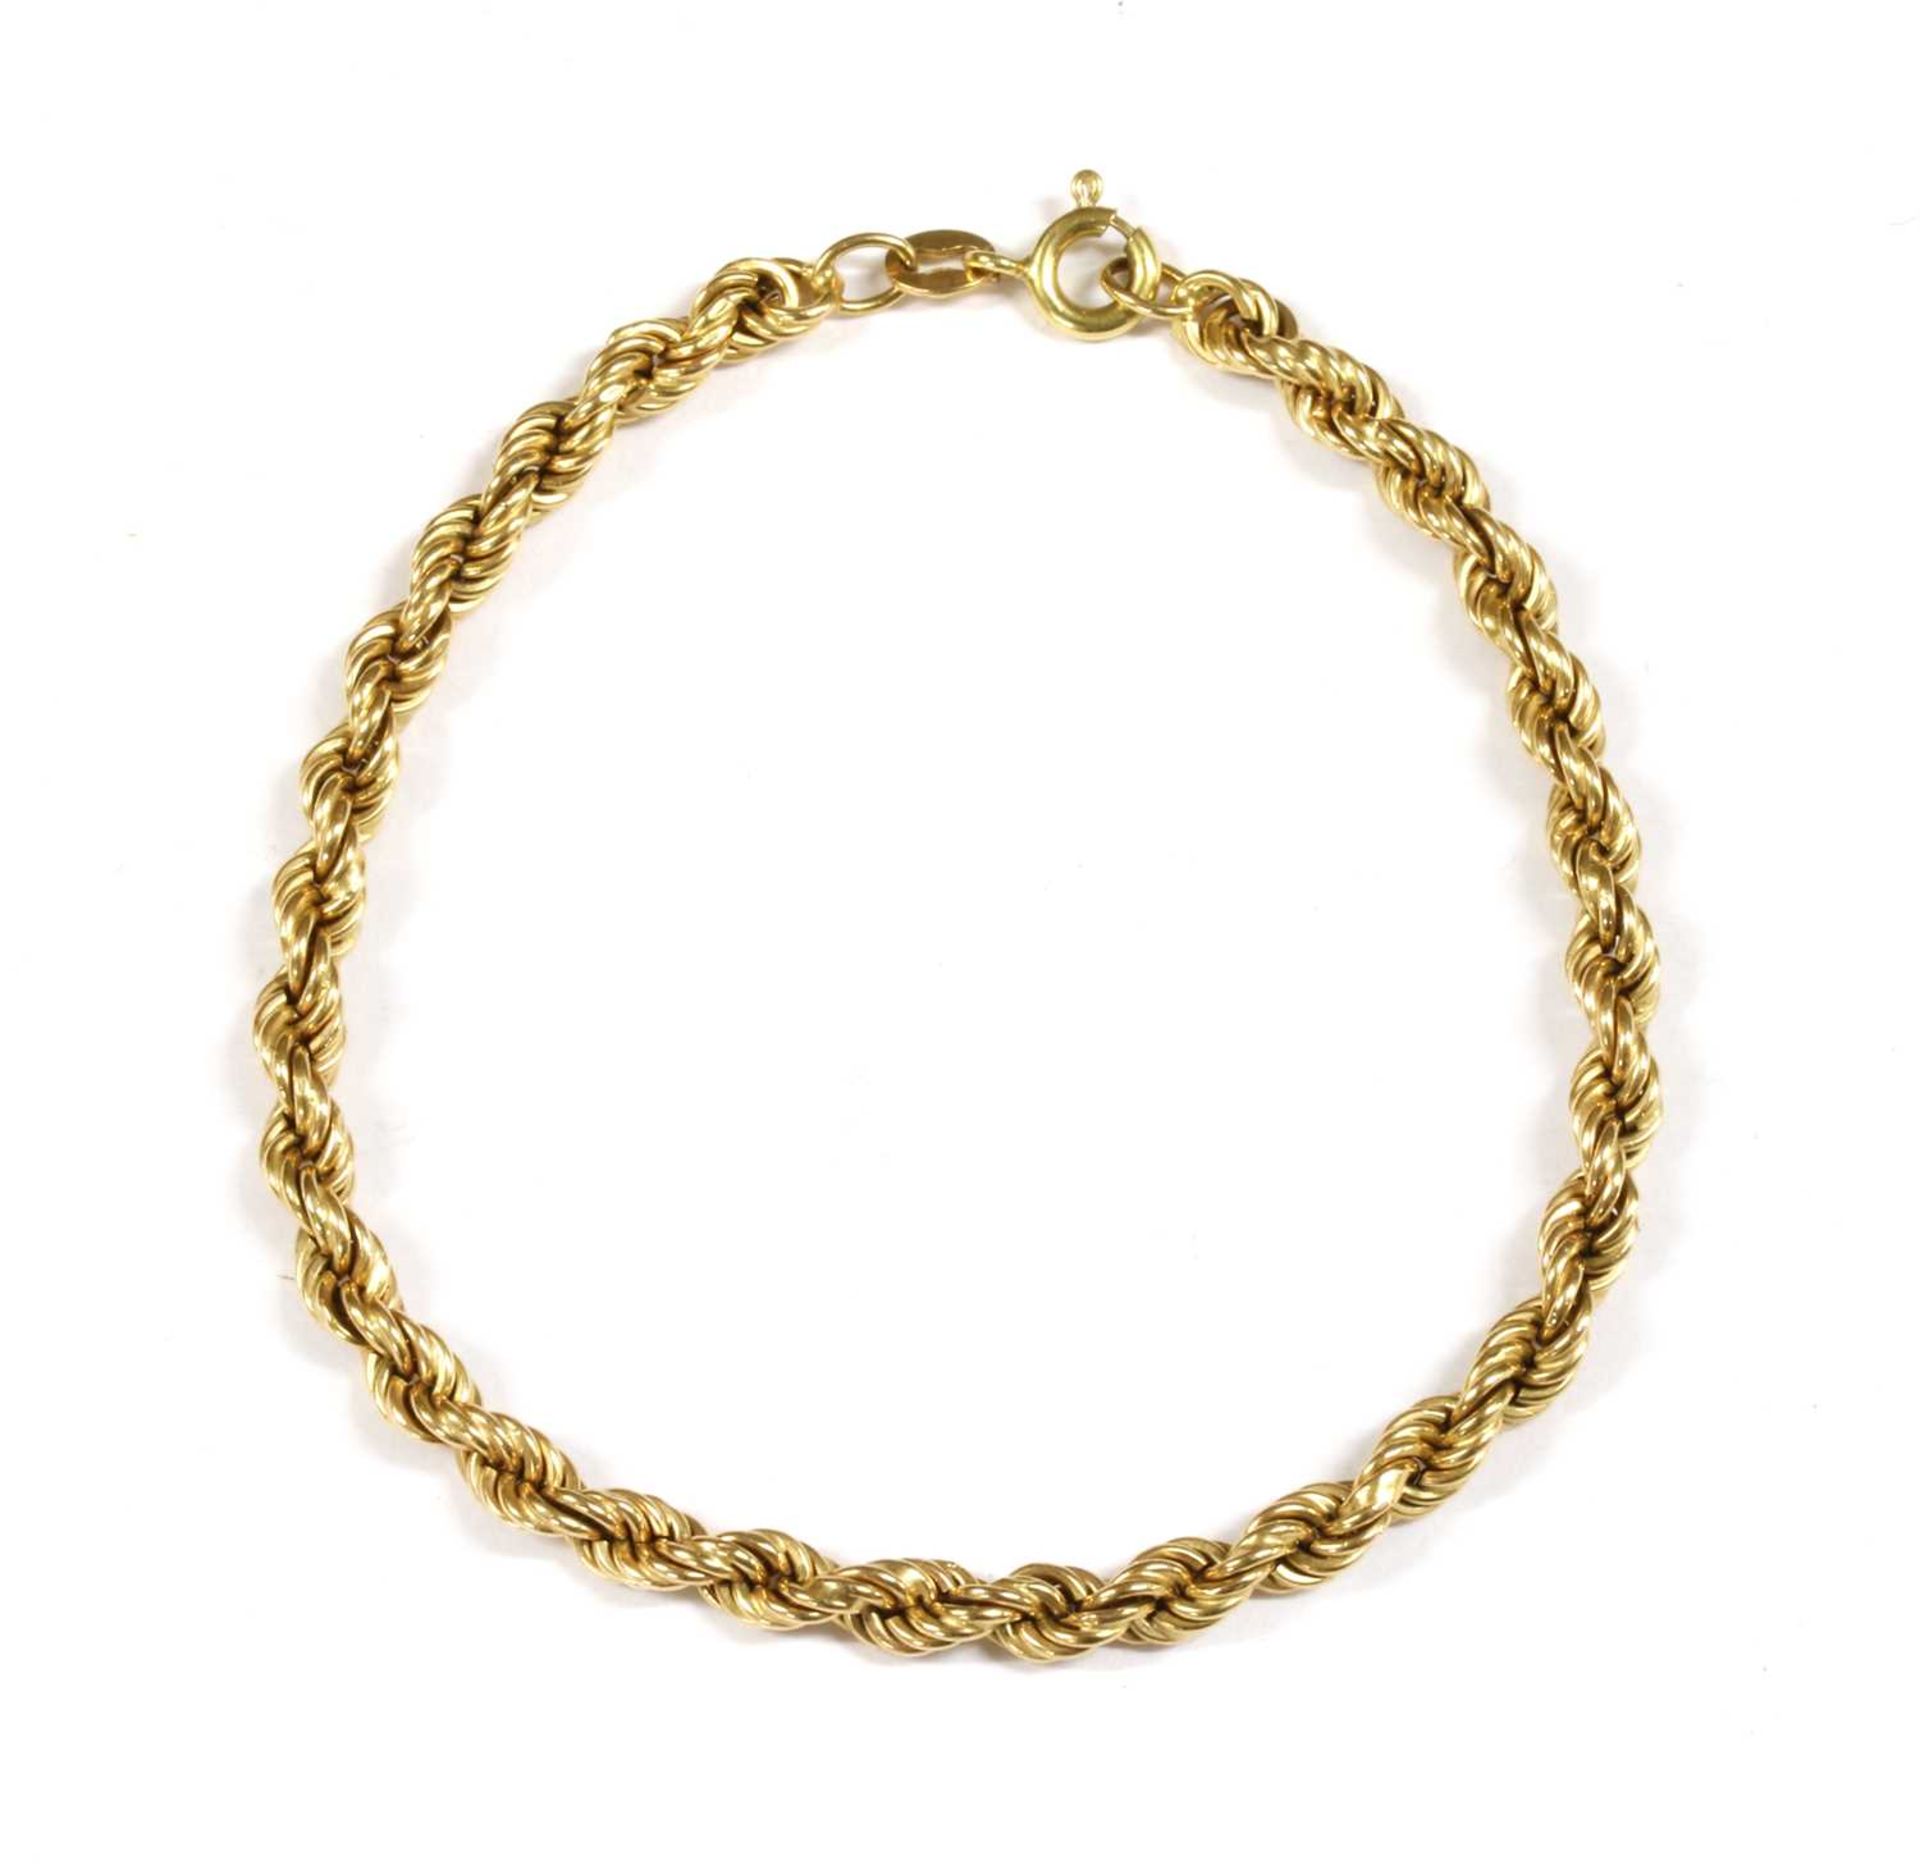 A gold hollow rope link bracelet,